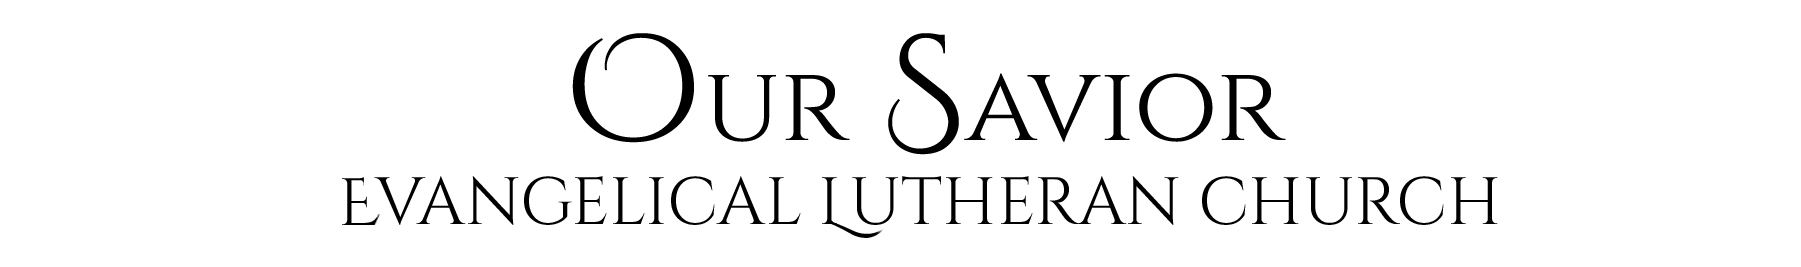 Our Savior Evangelical Lutheran Church